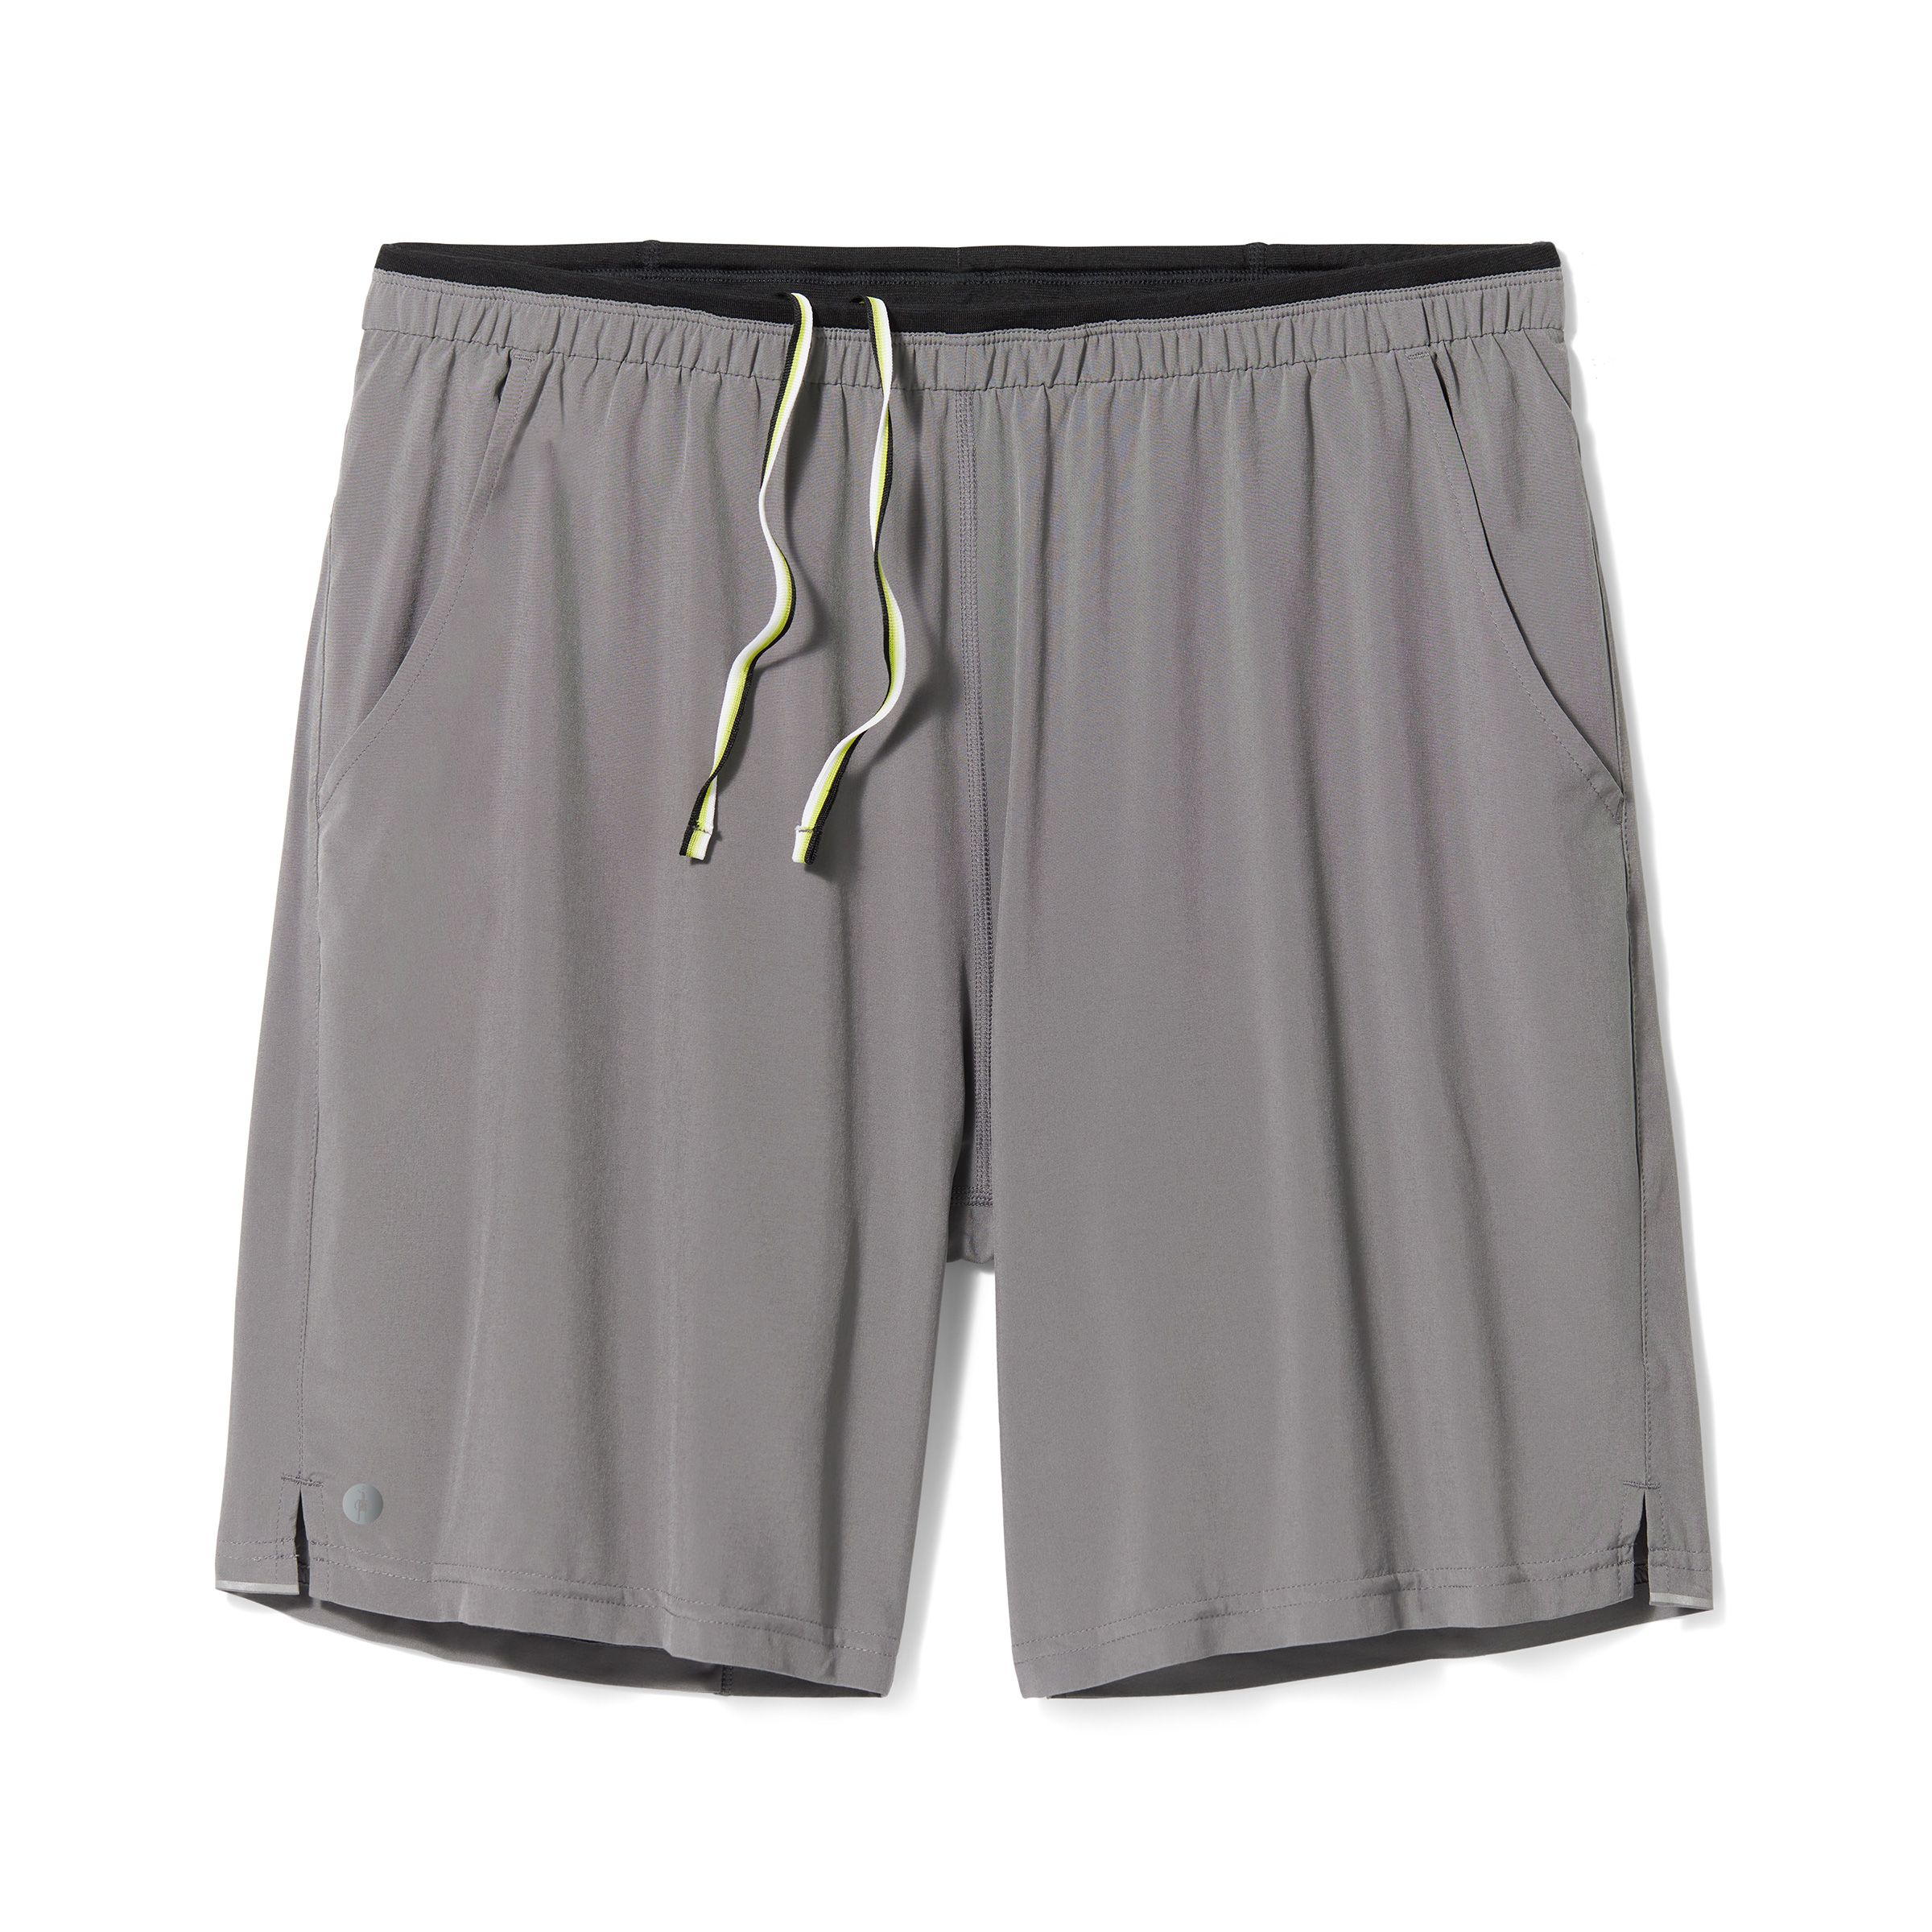 Men's 8 Polyester Compression Shorts W/ Pockets - Light Gray